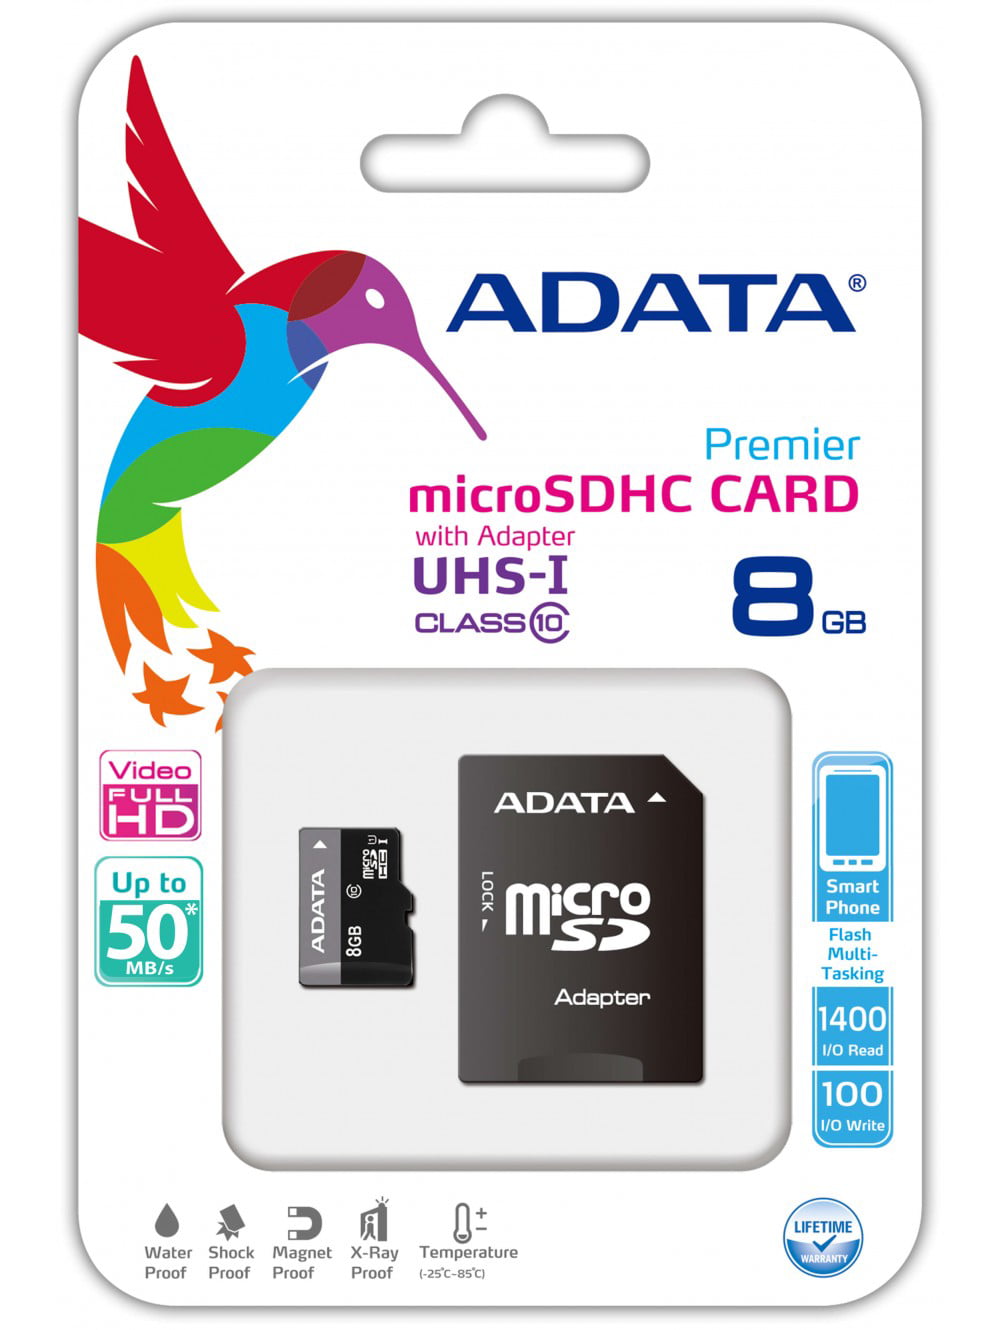 ADATA Micro SDHC Card Class 10 with Adapter - 8GB Memory Card - Walmart.com - Walmart.com